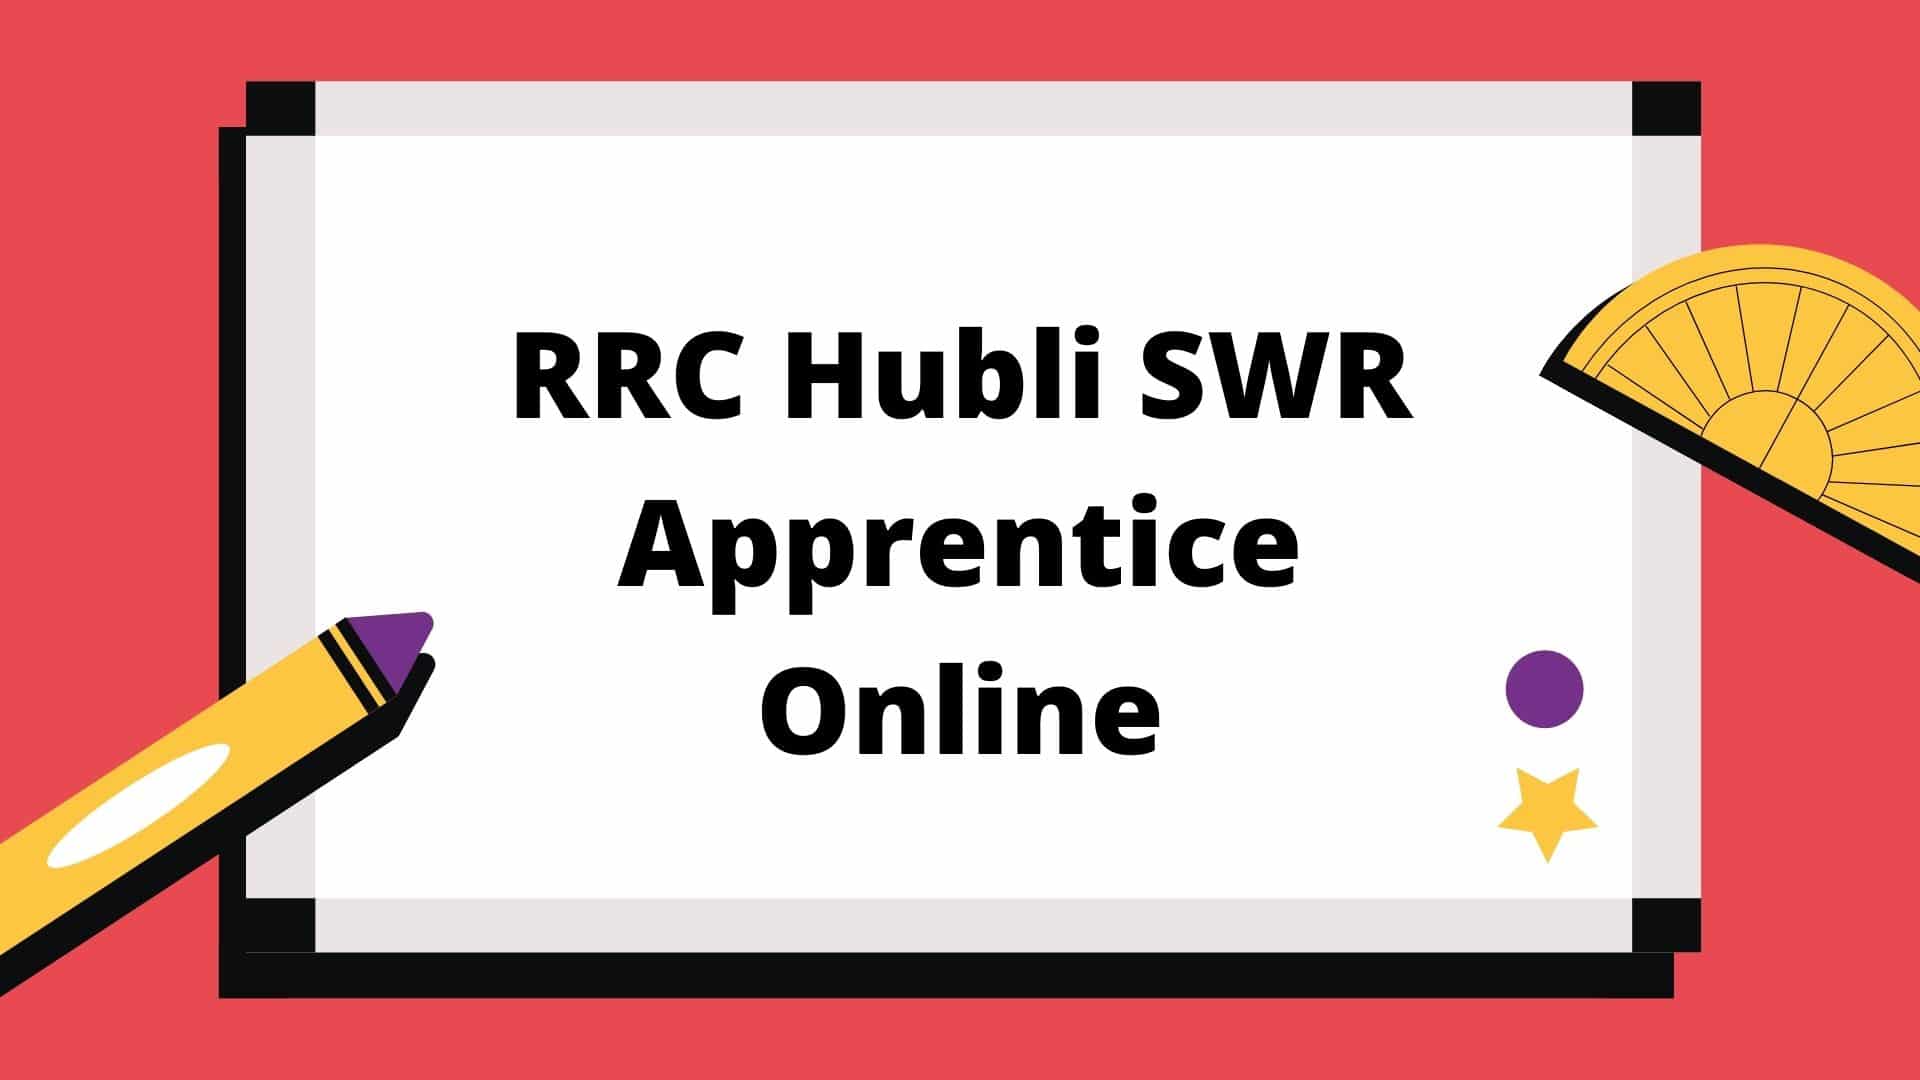 RRC Hubli SWR Apprentice Online